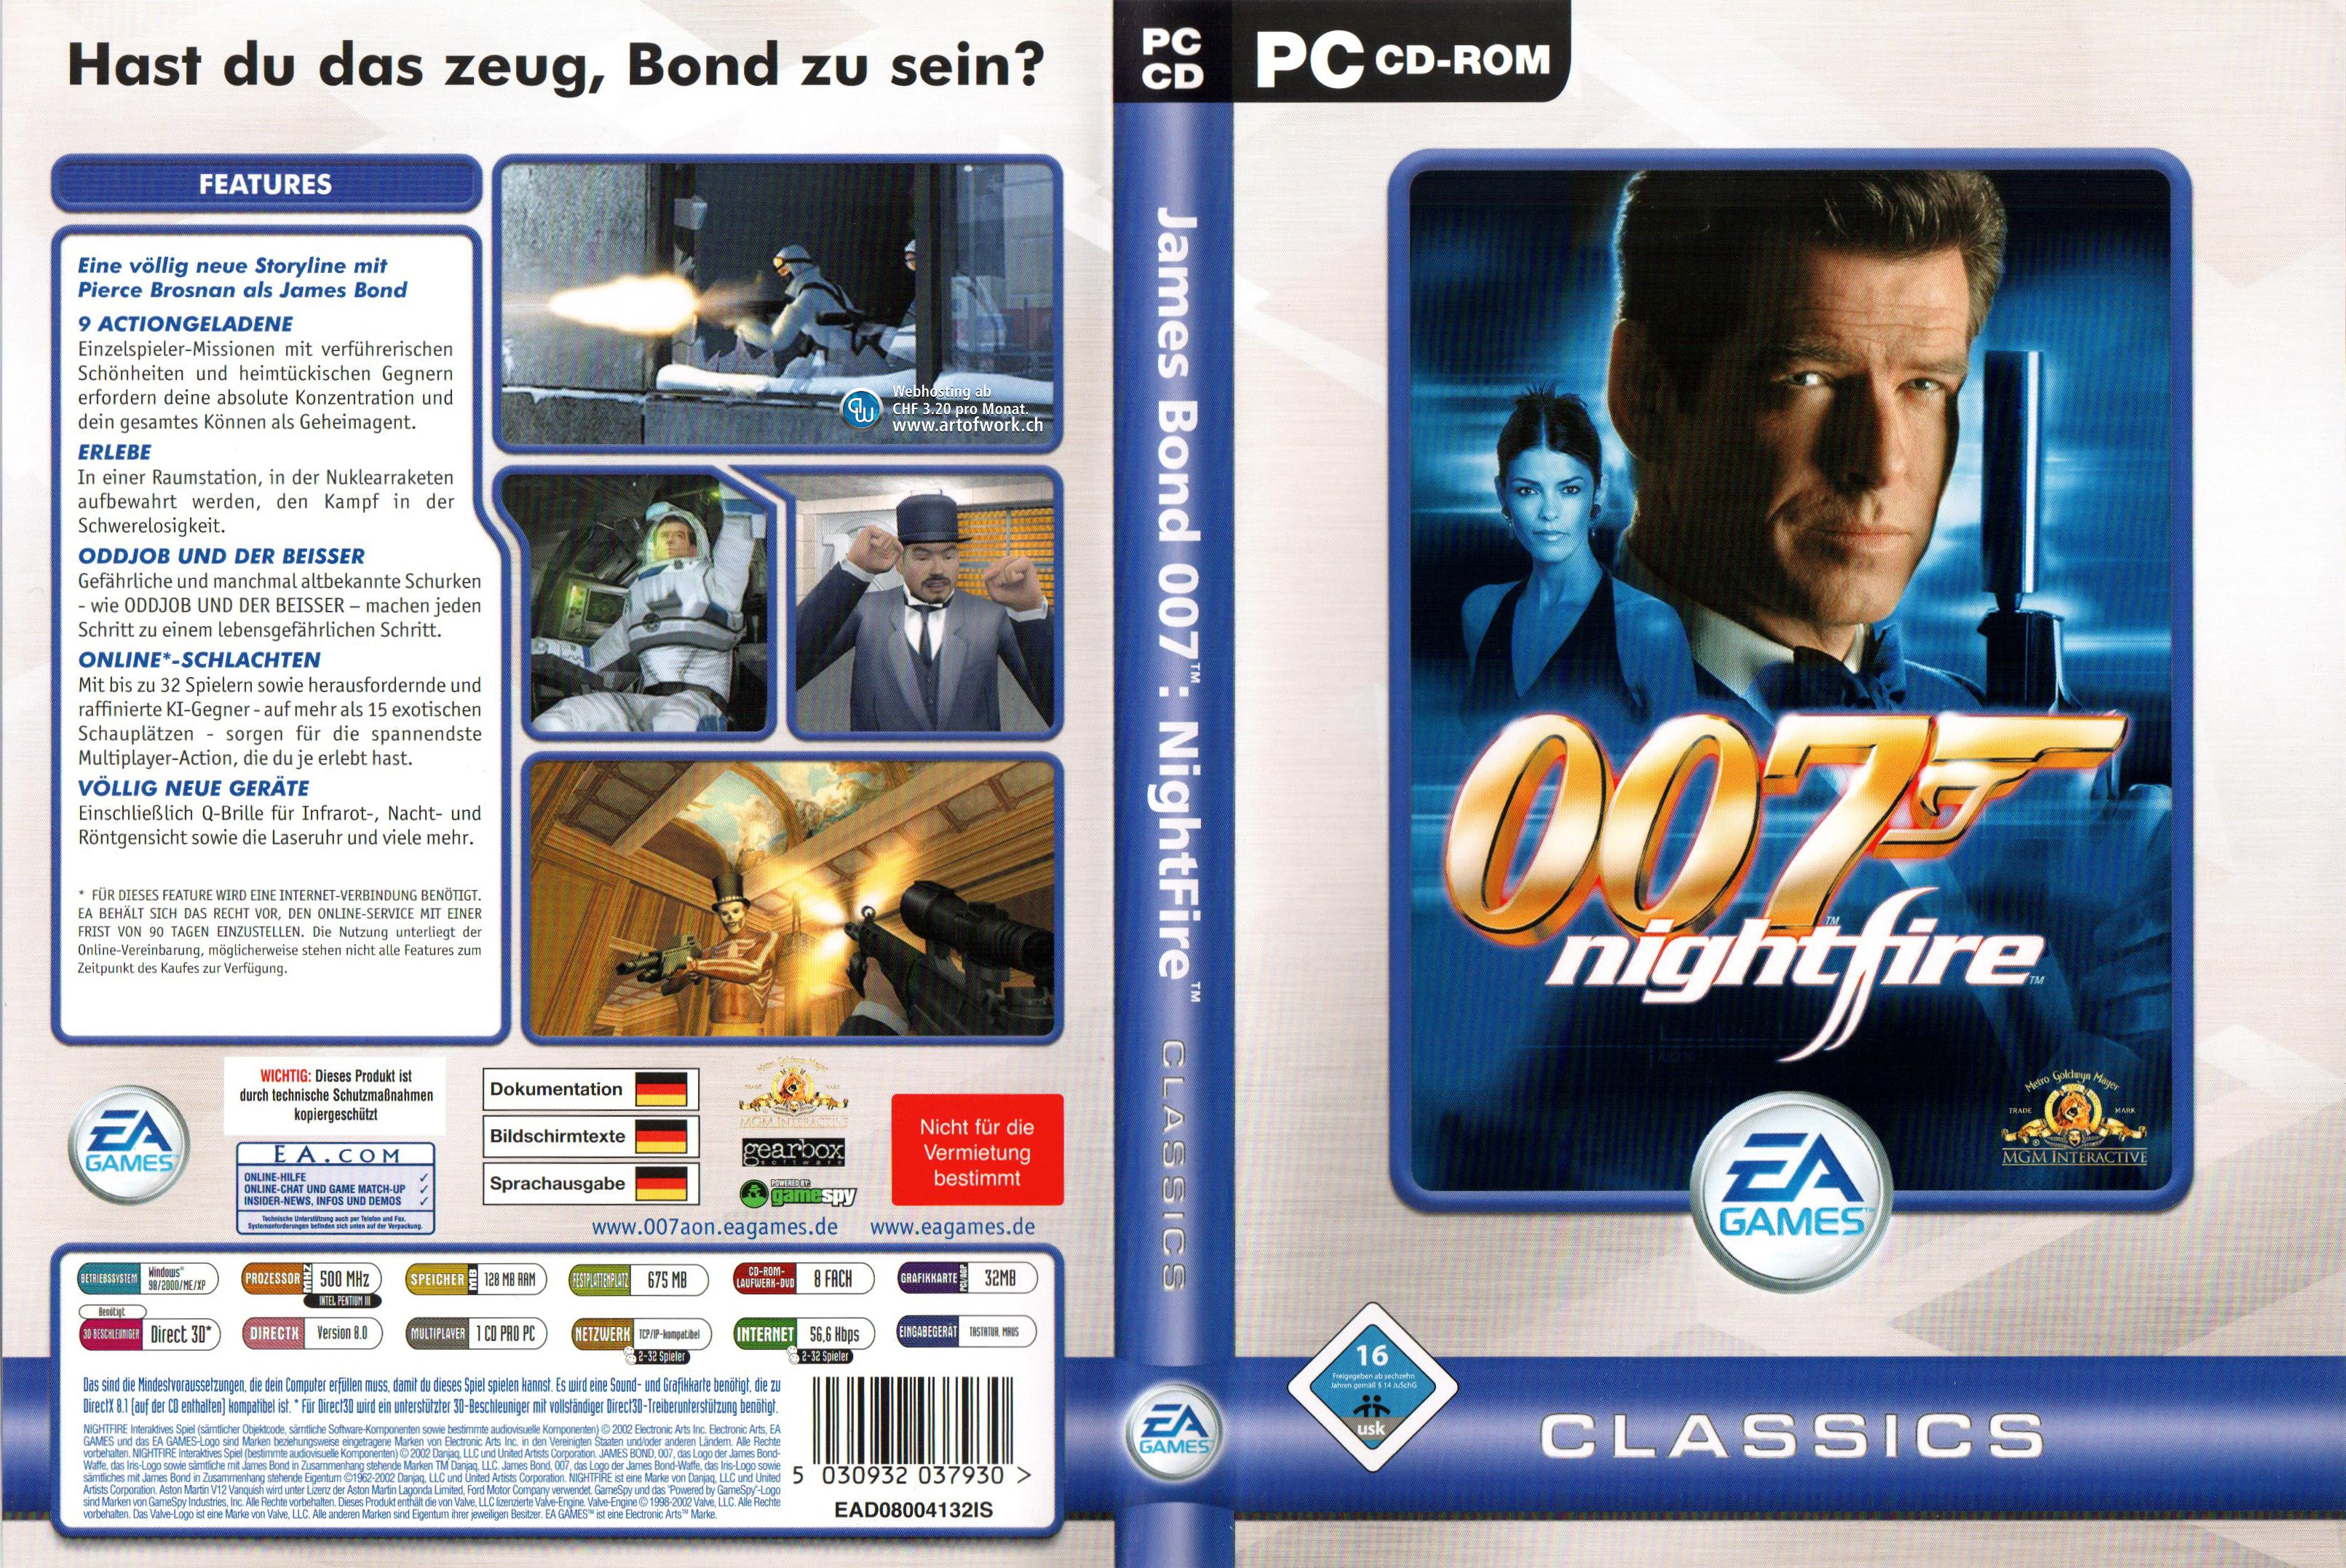 James Bond 007 Nightfire Pc Covers Cover Century Over